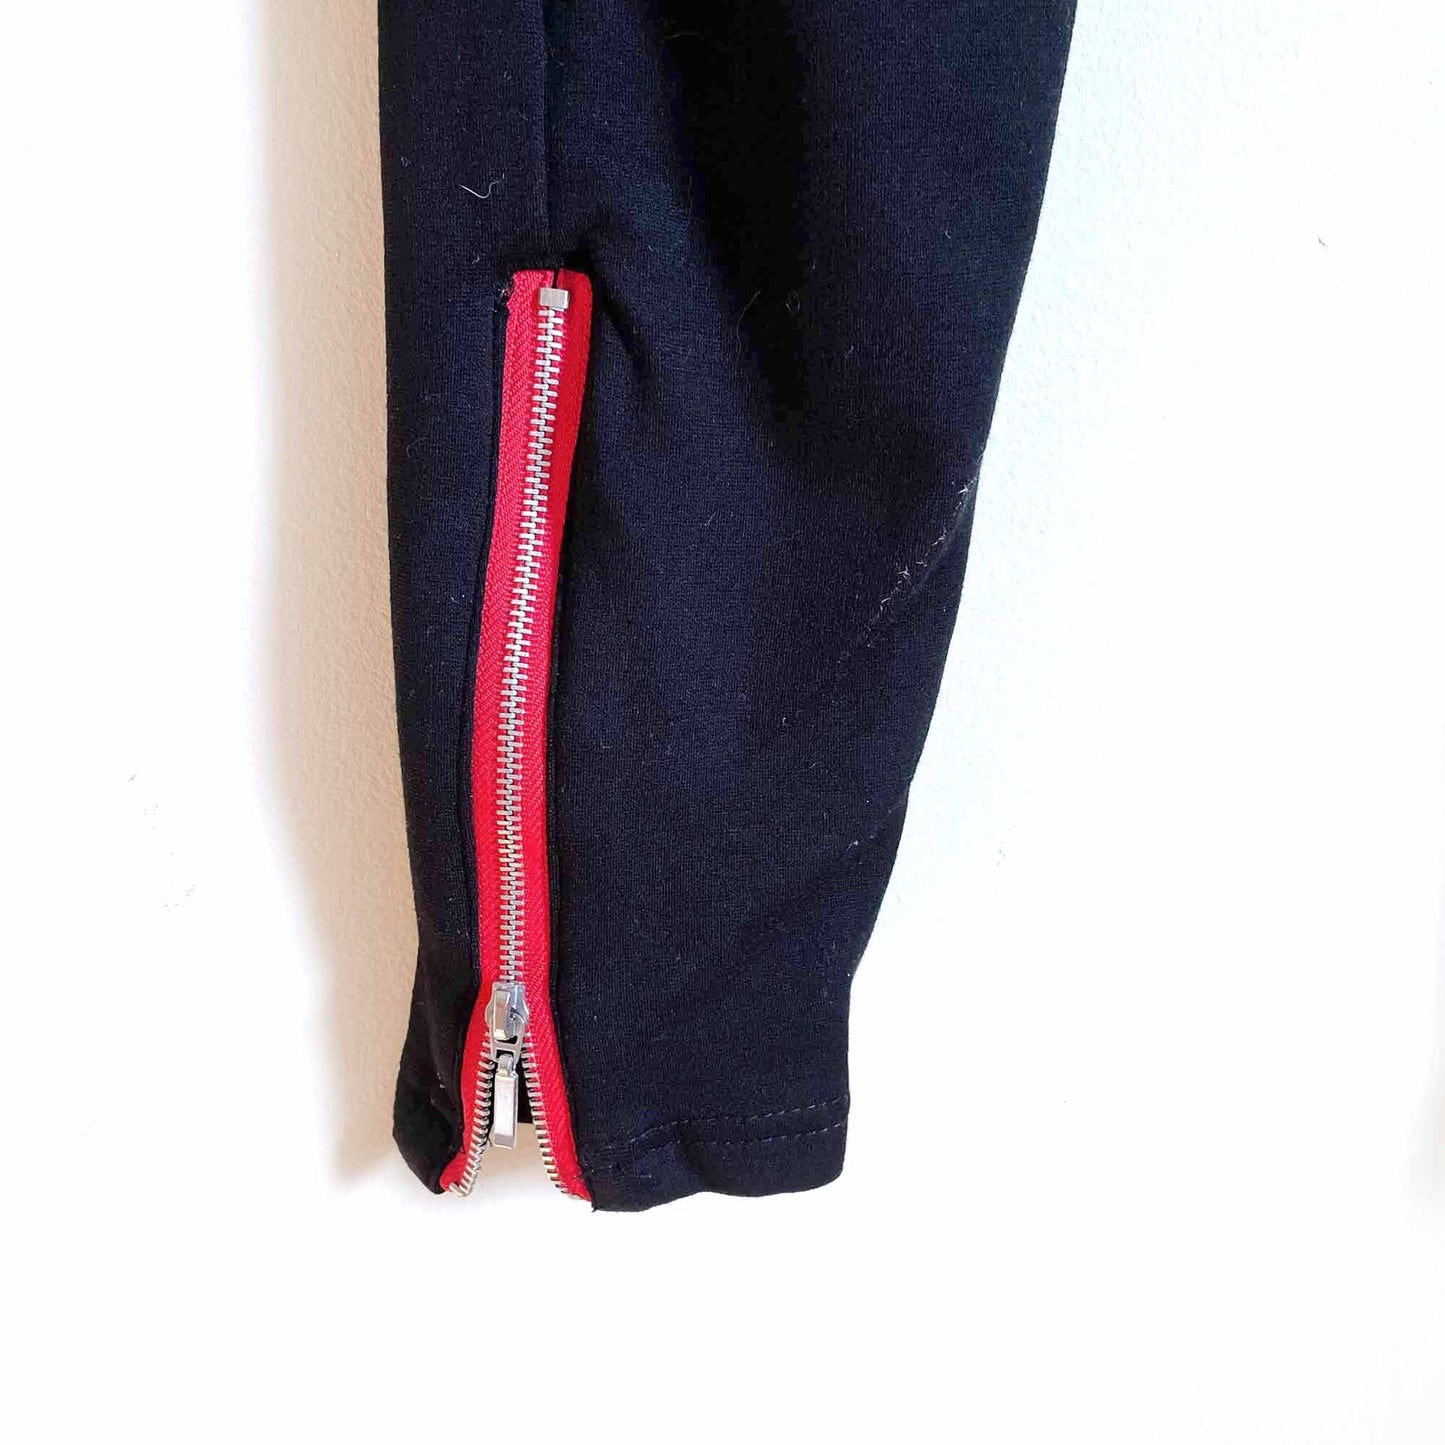 fylo ankle zip high rise leggings - size medium